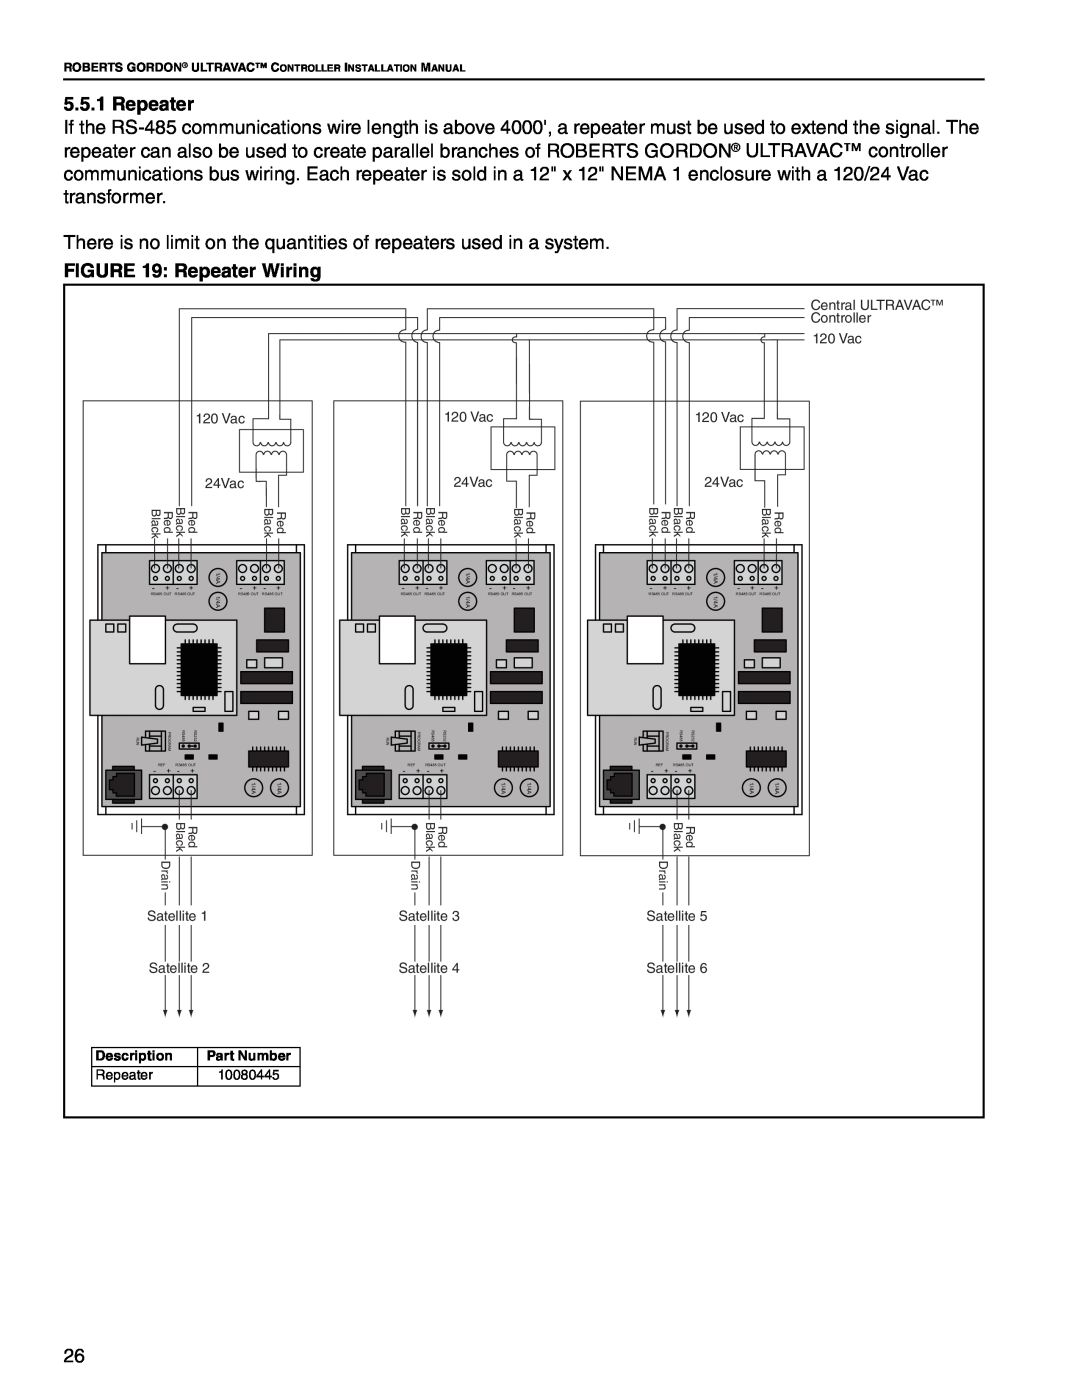 Roberts Gorden NEMA 4 installation manual Repeater Wiring 